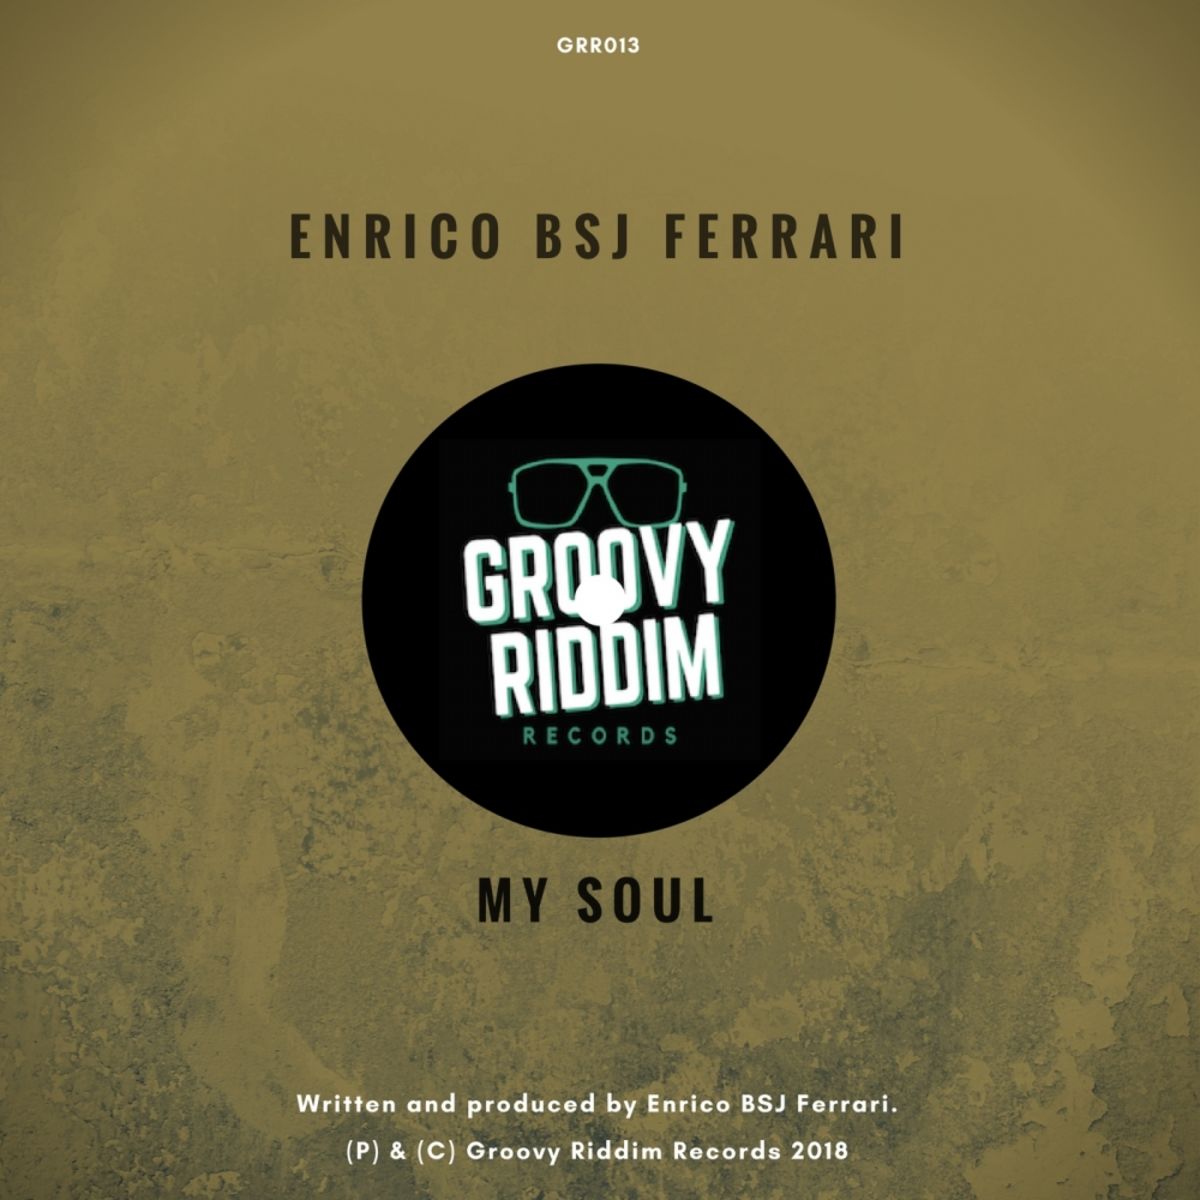 Enrico BSJ Ferrari - My Soul / Groovy Riddim Records